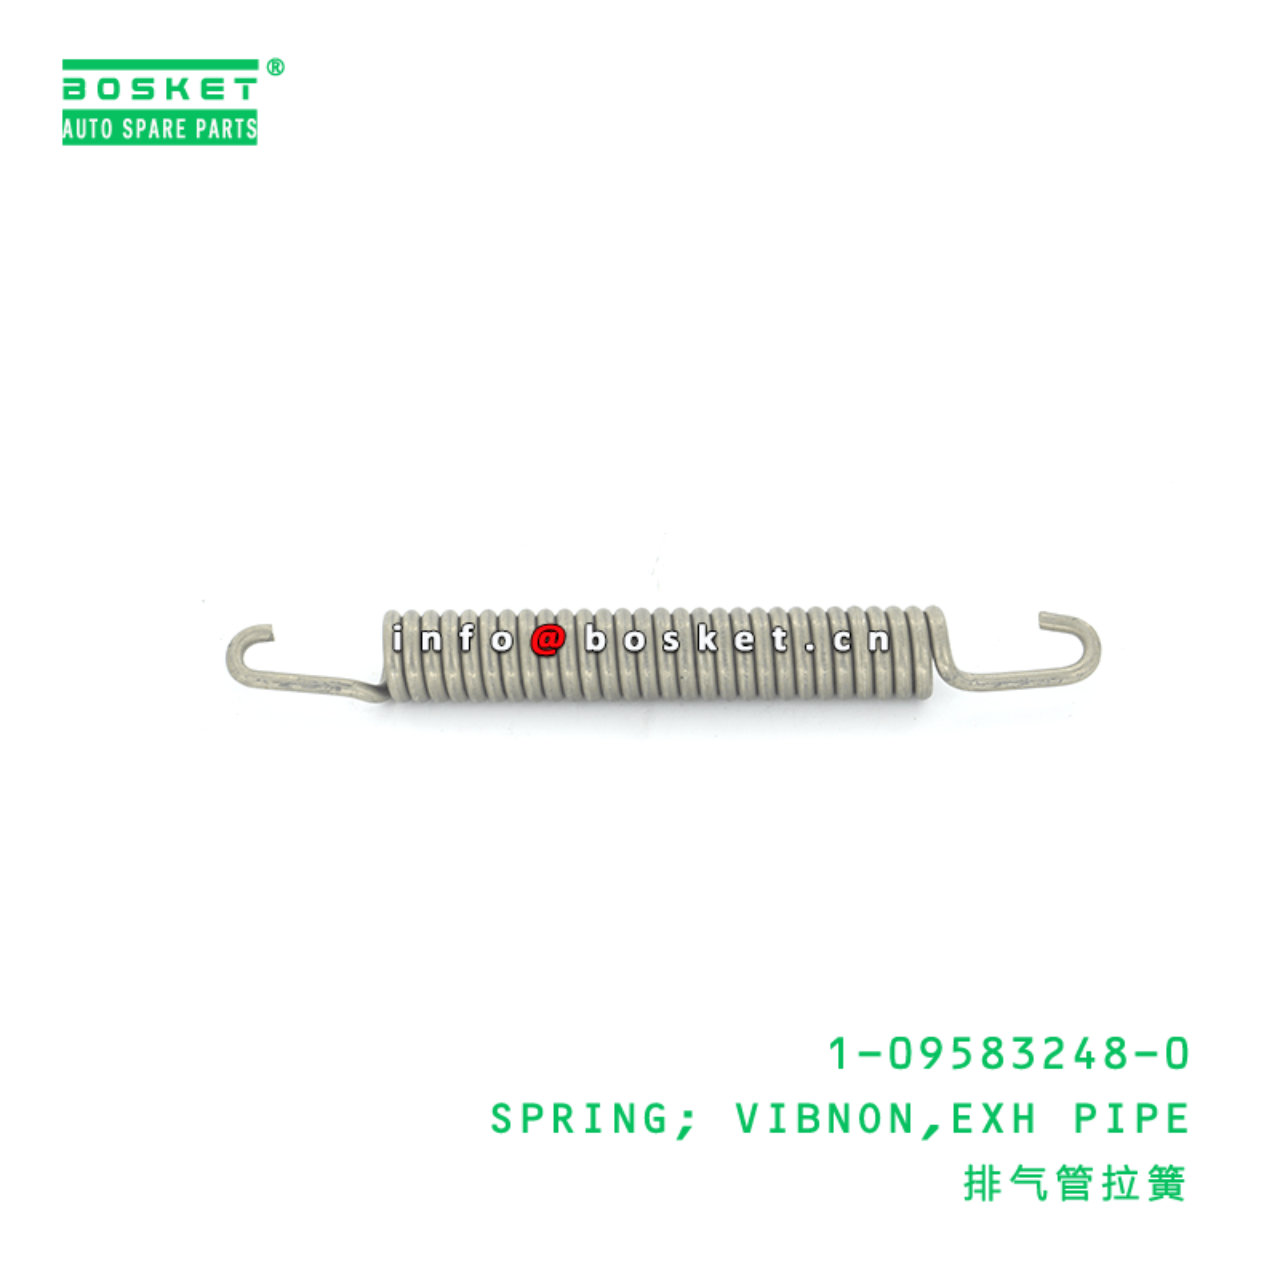 1-09583248-0 Exhaust Pipe Vibnon Spring 1095832480 Suitable for ISUZU CXZ81 10PE1